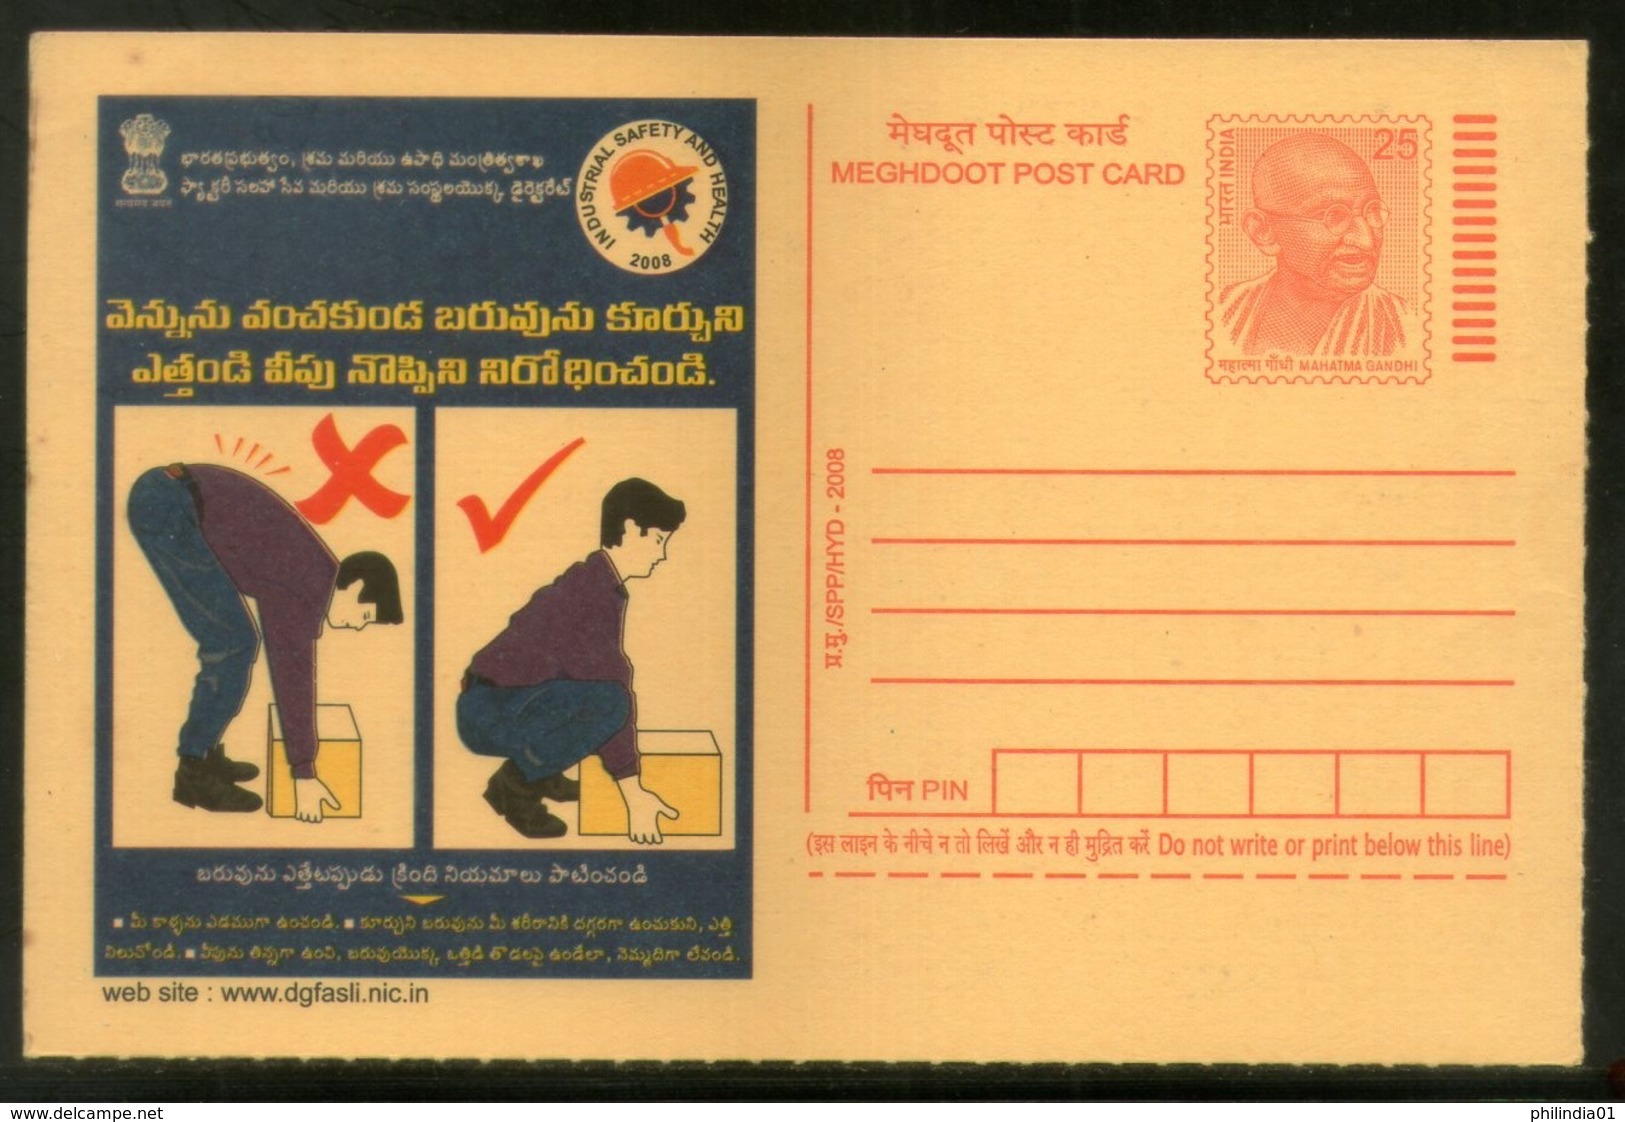 India 2008 Prevent Backaches Industrial Safety & Health Telugu Advert.Gandhi Post Card # 508 - Accidentes Y Seguridad Vial